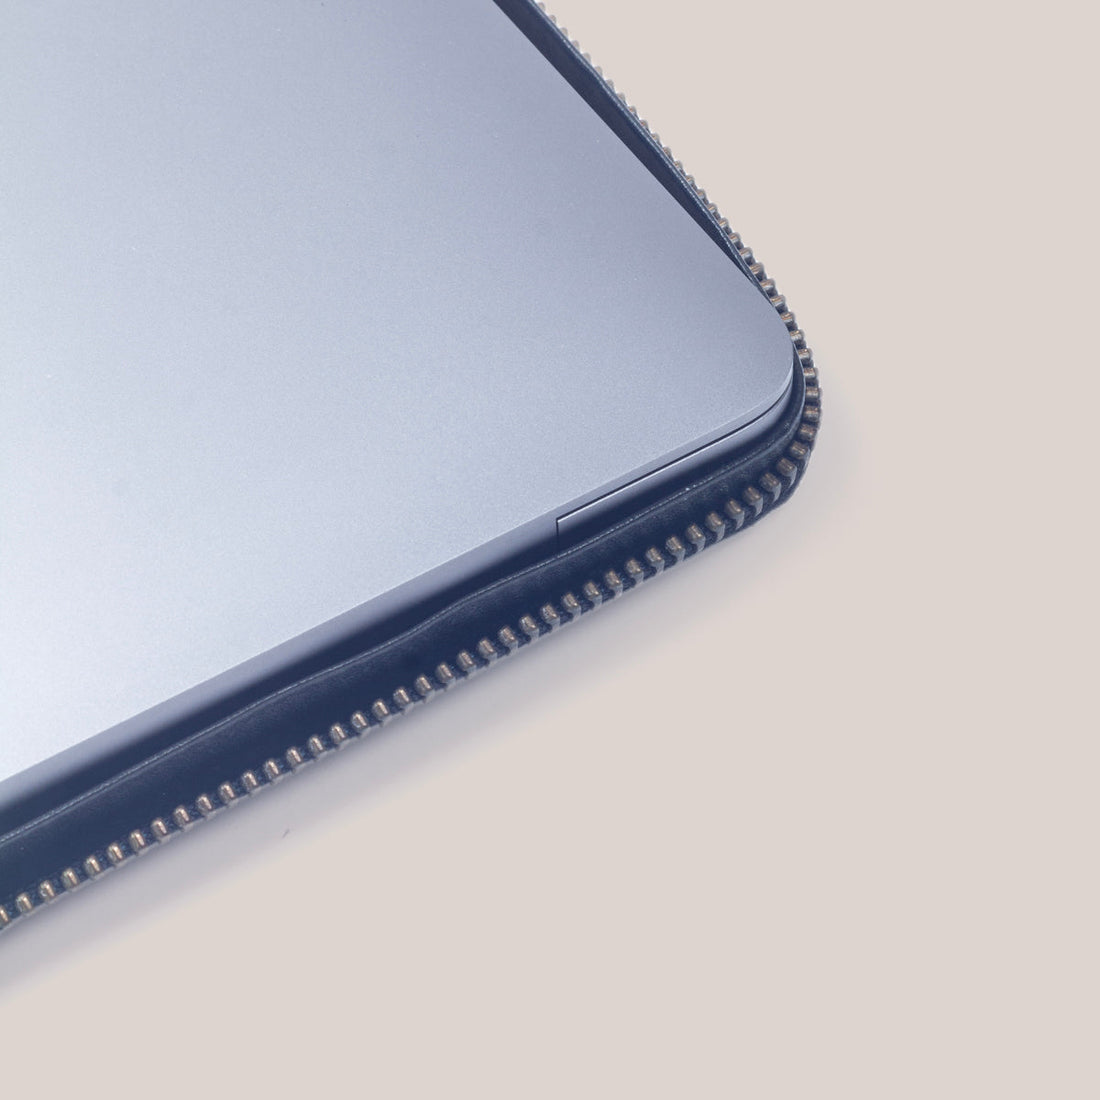 MacBook Pro 14 Zippered Laptop Case - Onyx Black